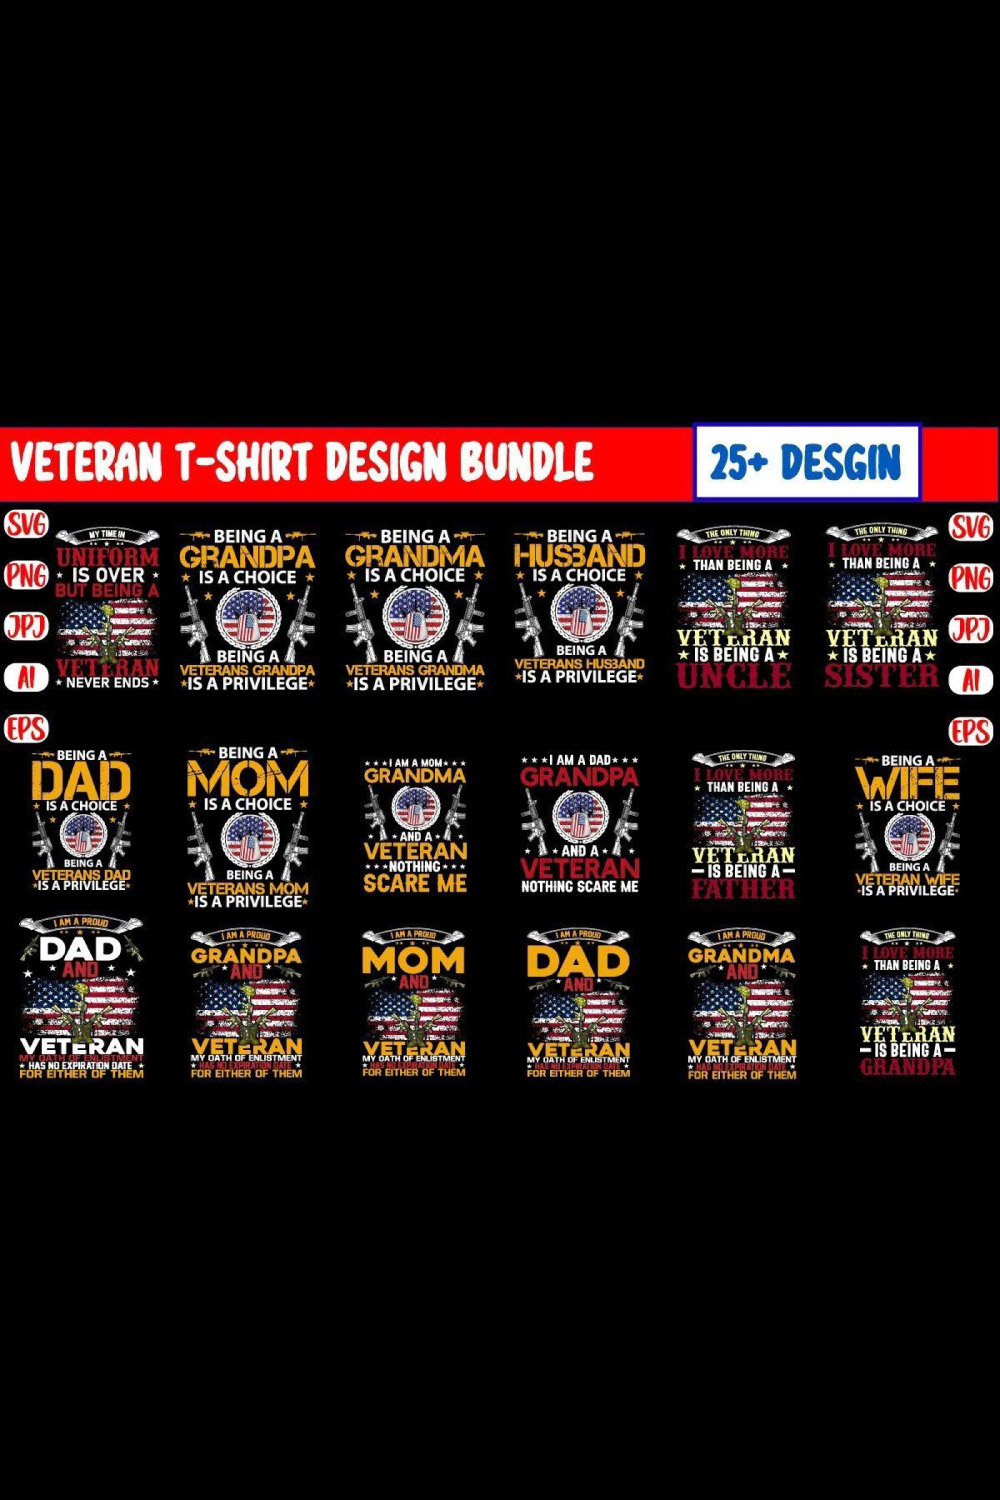 Veteran T-Shirt Design Bundle us army veterans t-shirt design pinterest preview image.